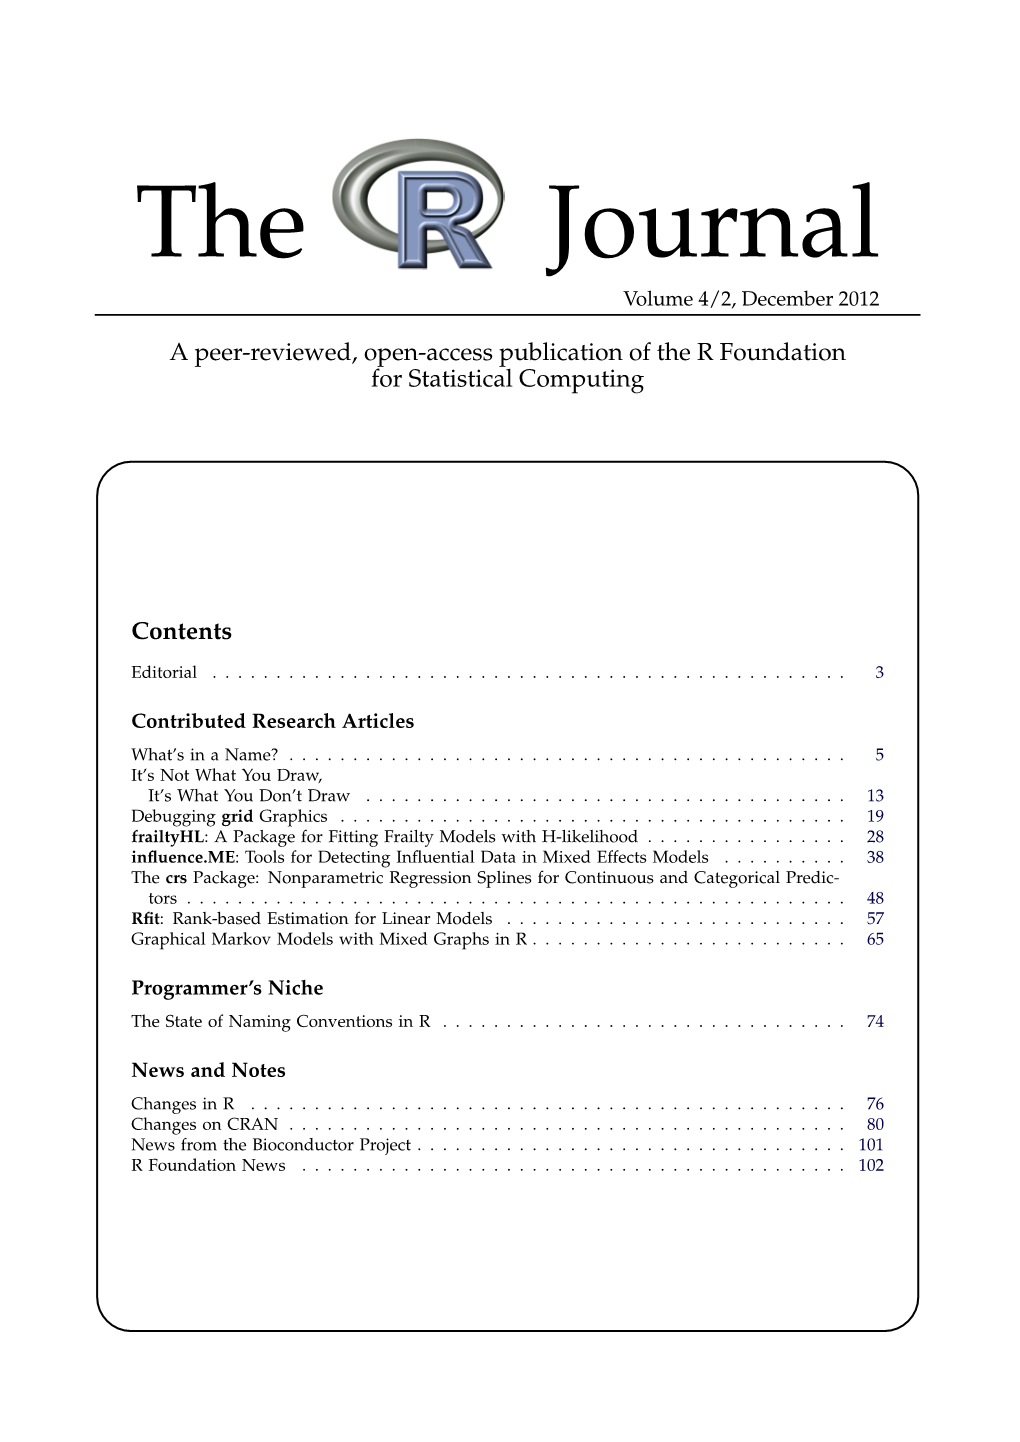 The R Journal Volume 4/2, December 2012